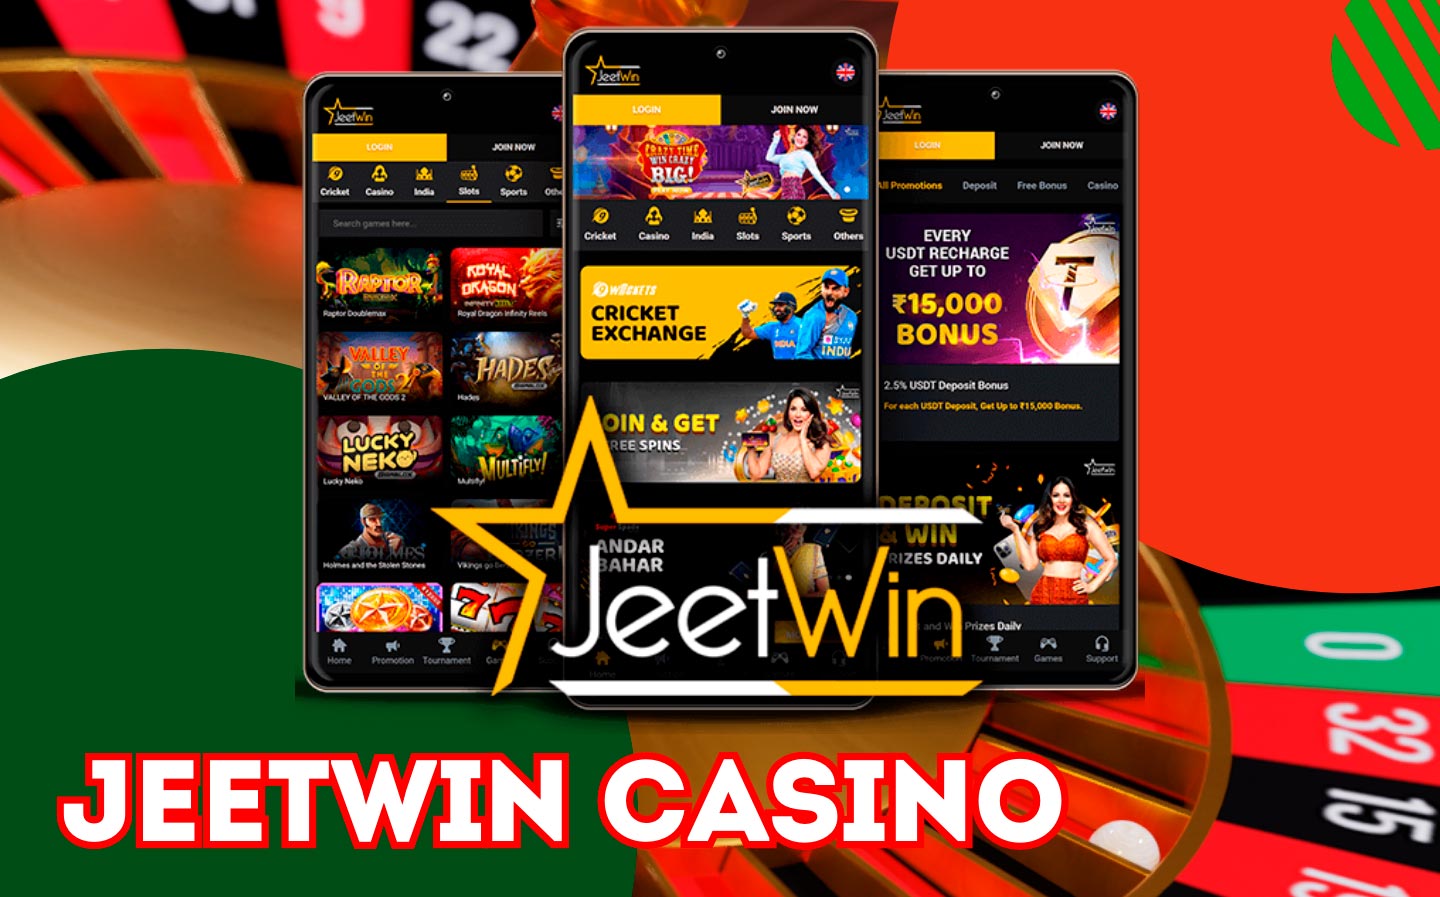 JeetWin online casino cooperates